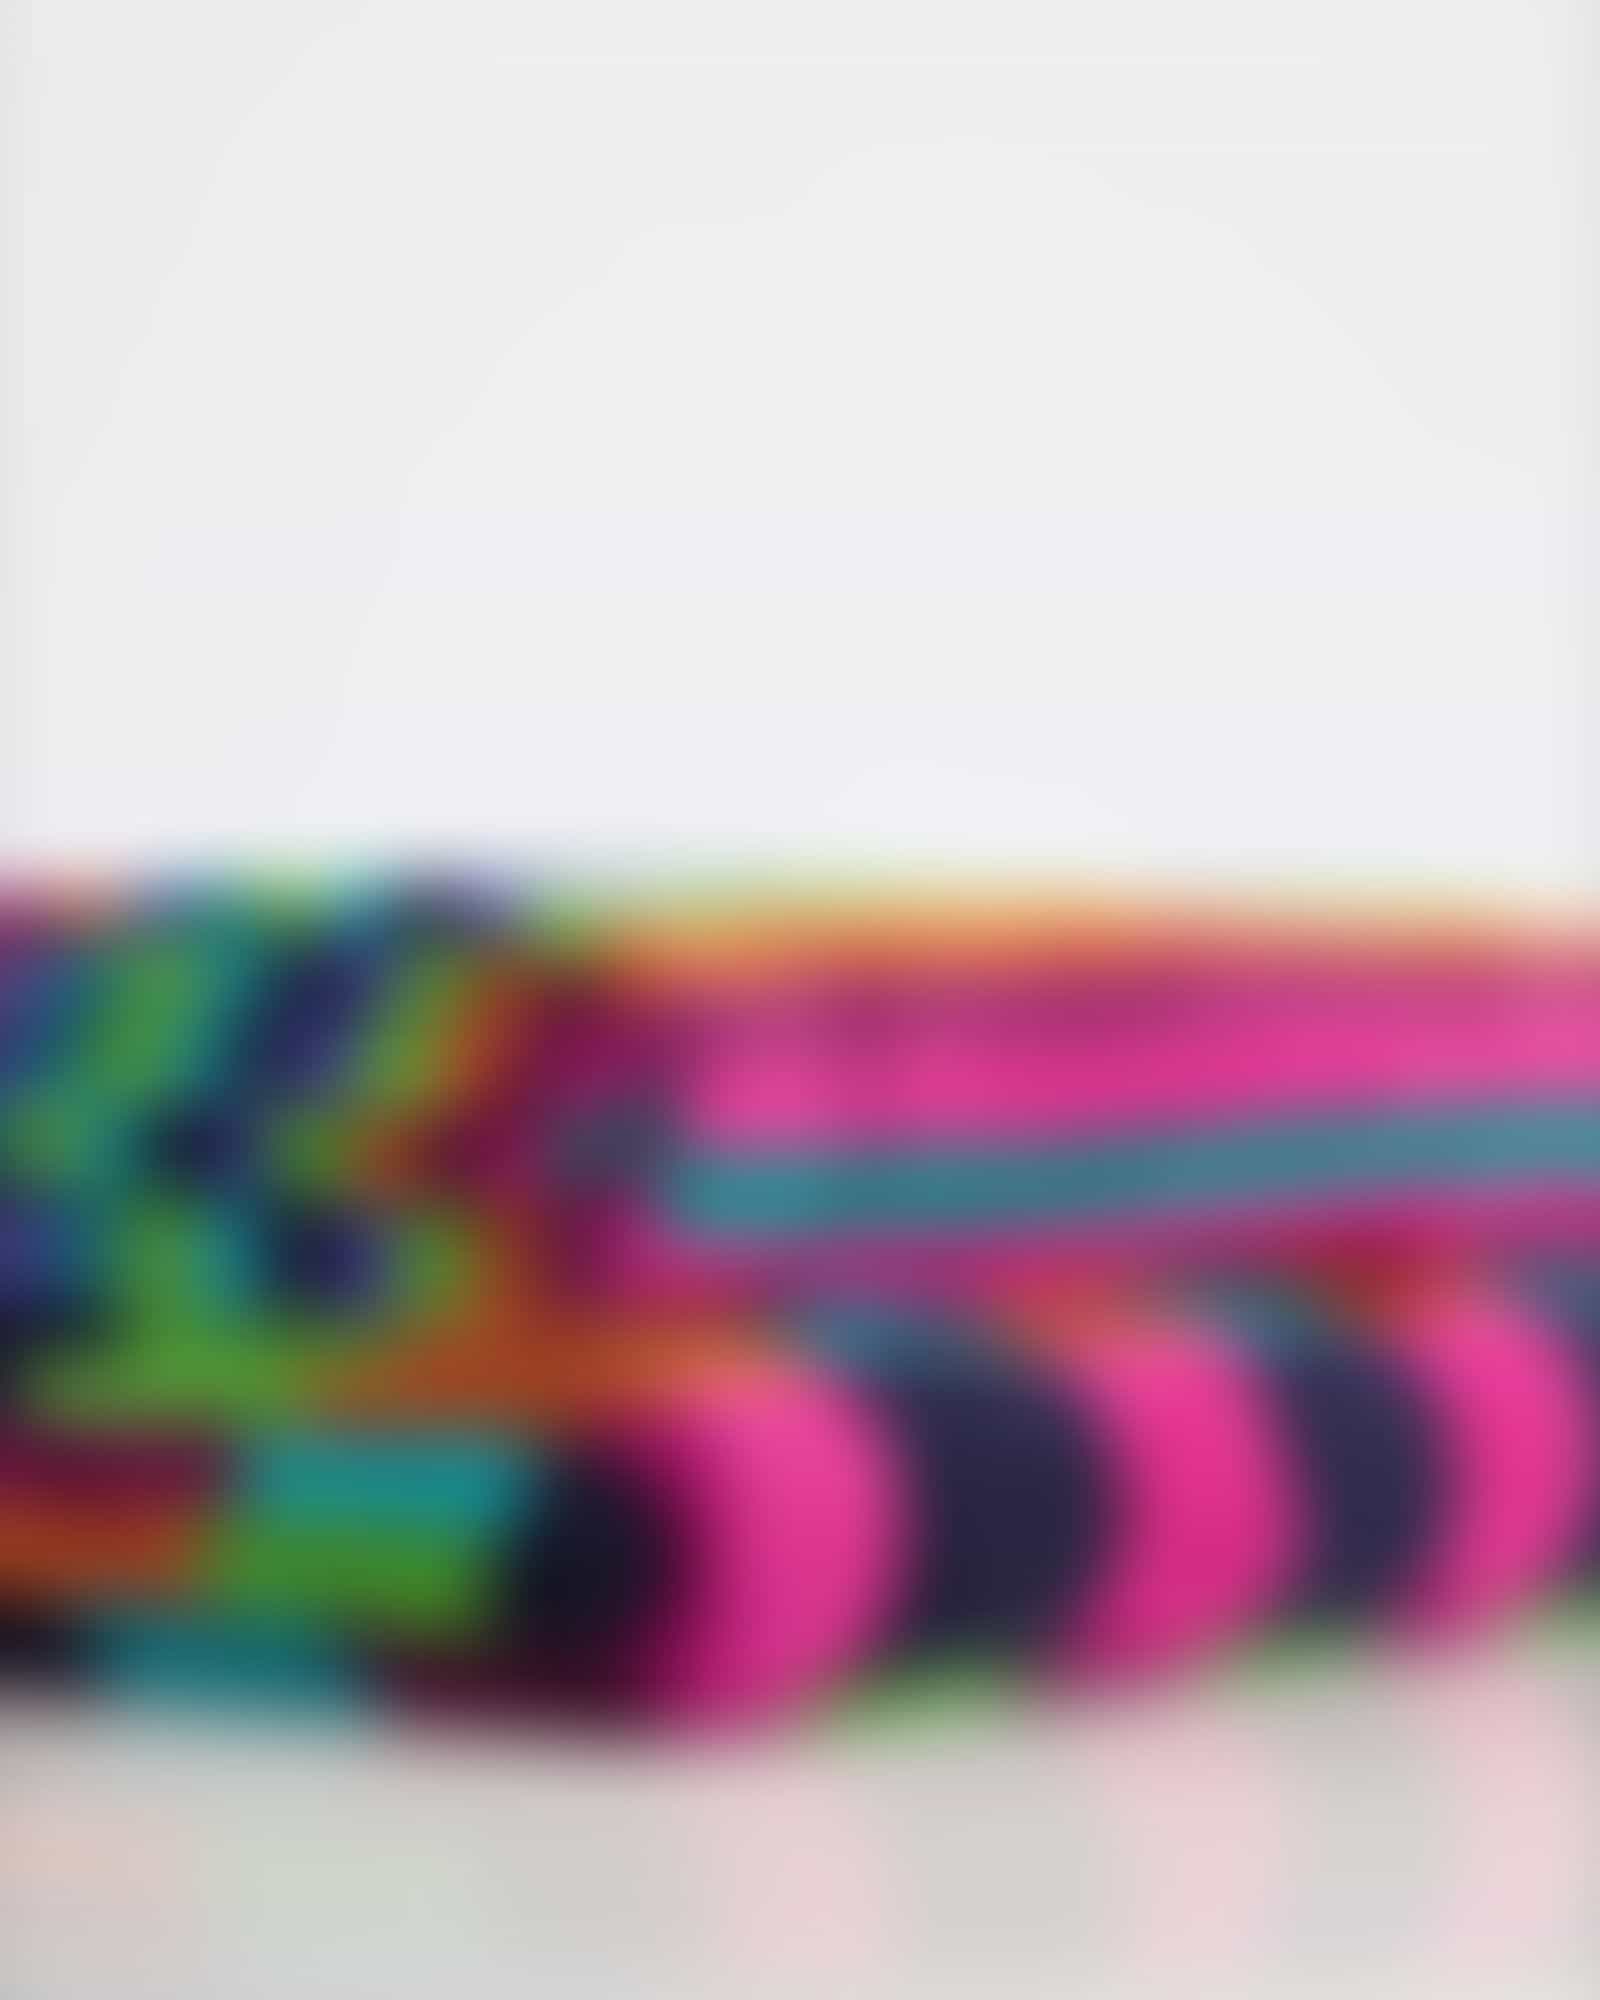 Cawö - Life Style Streifen 7048 - Farbe: 84 - multicolor - Duschtuch 70x140 cm